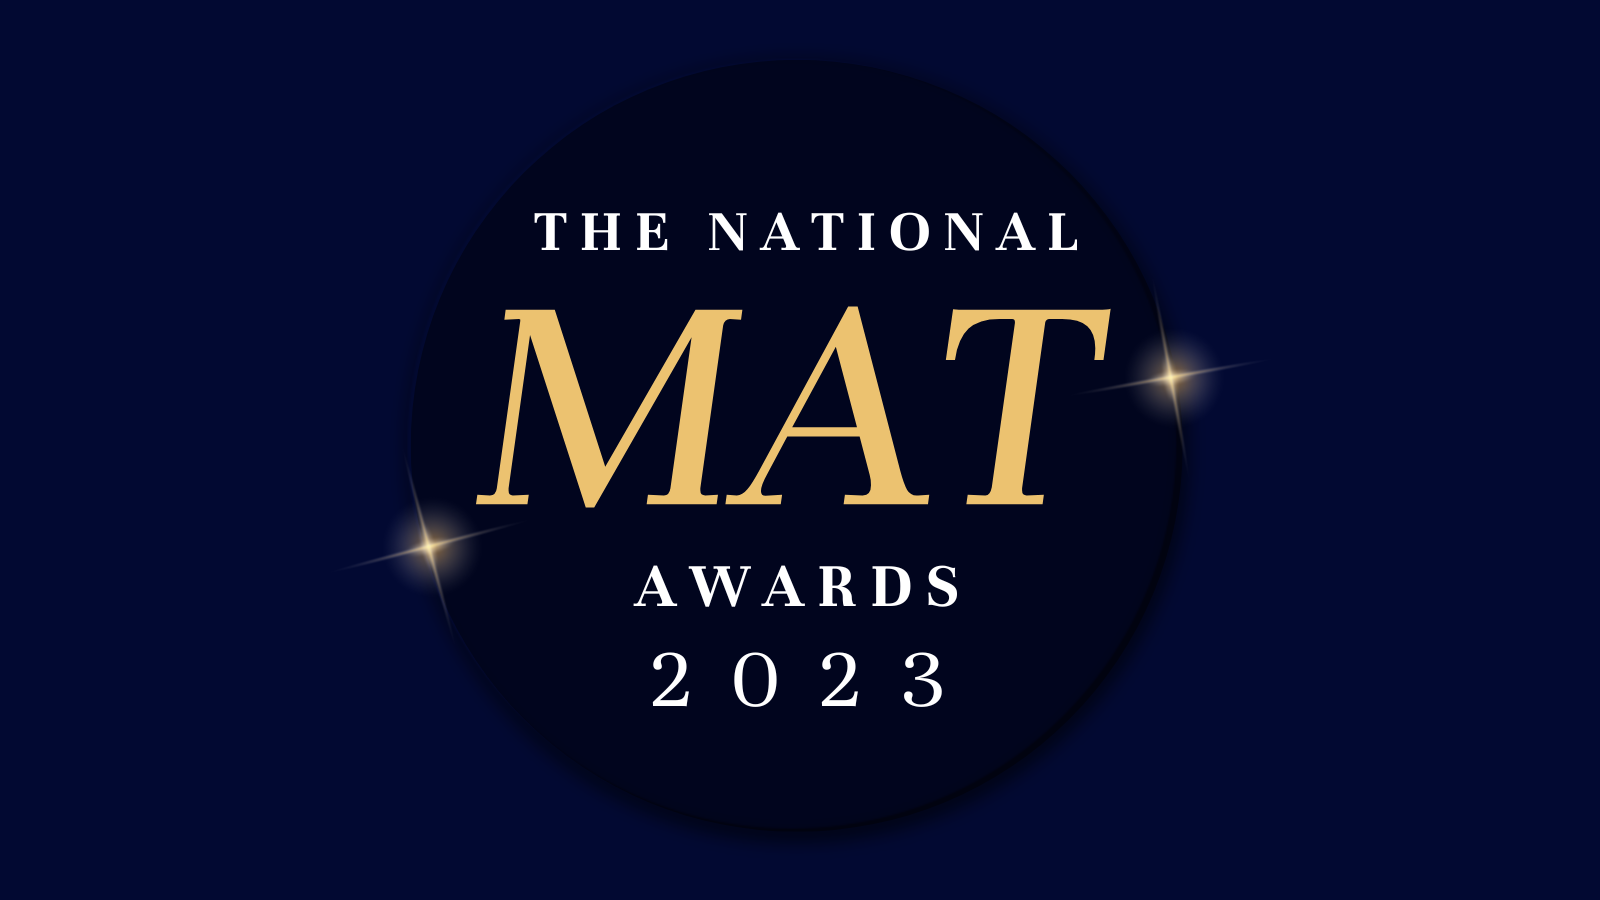 Convenzis Event The National MAT Awards 2023